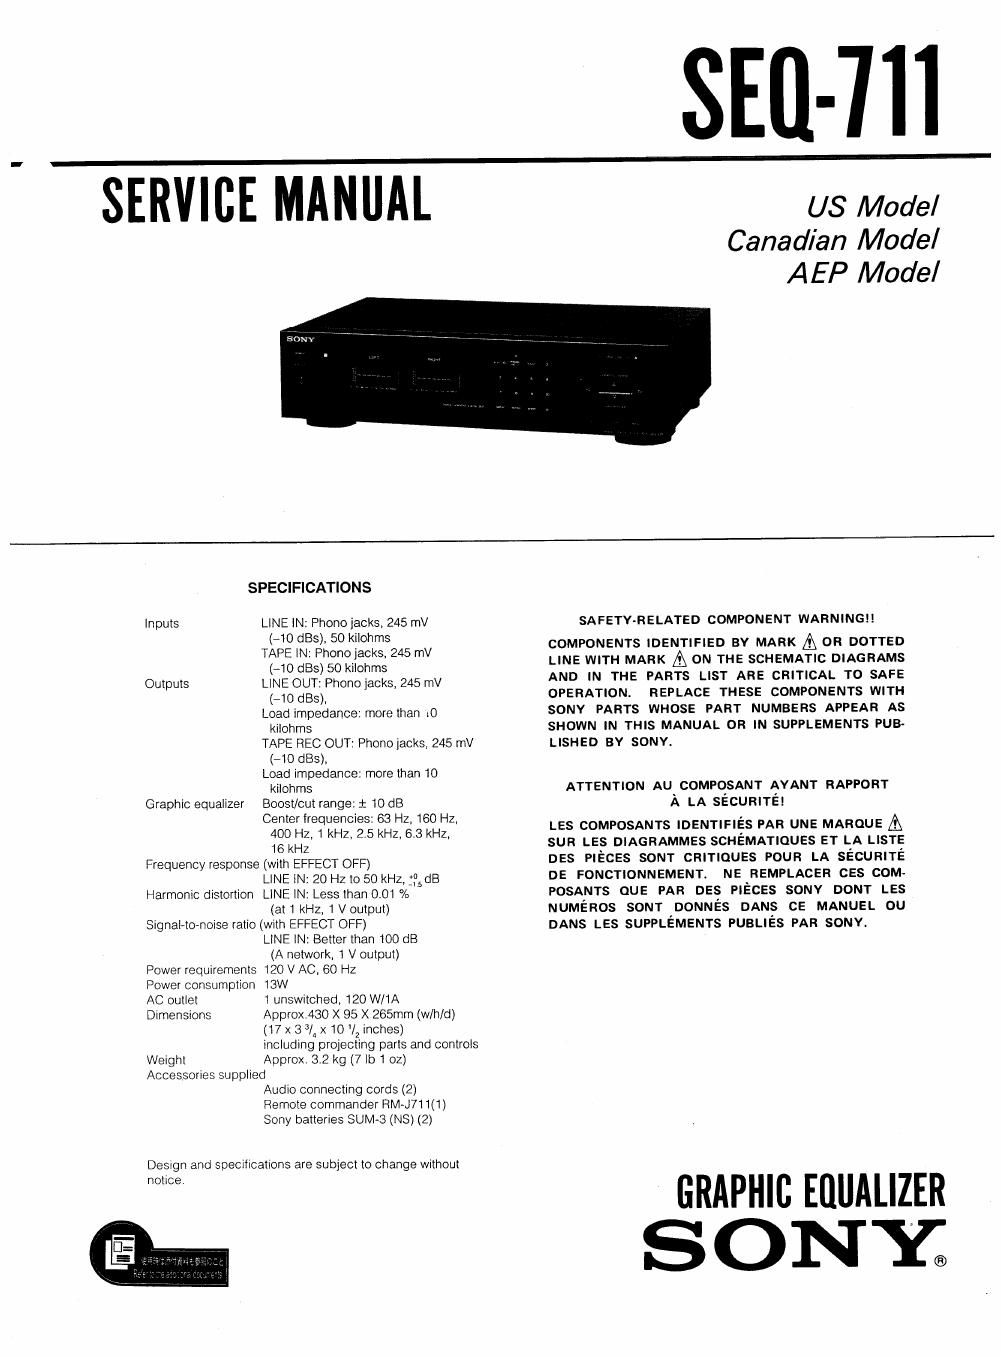 sony seq 711 service manual